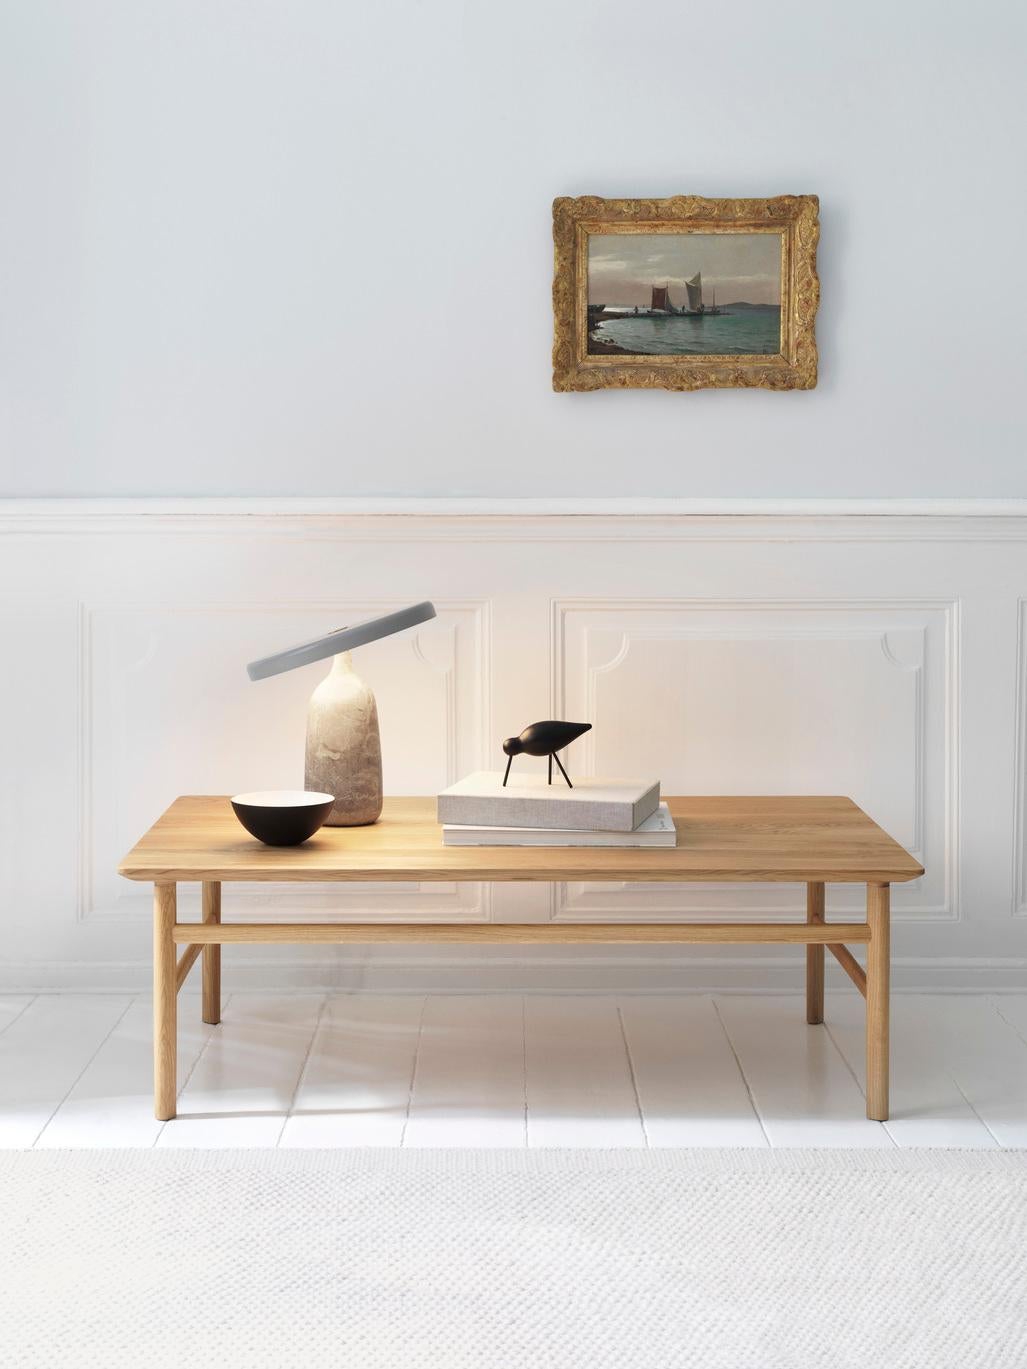 Contemporary Normann Copenhagen Eddy Table Lamp Designed by Simon Legald For Sale